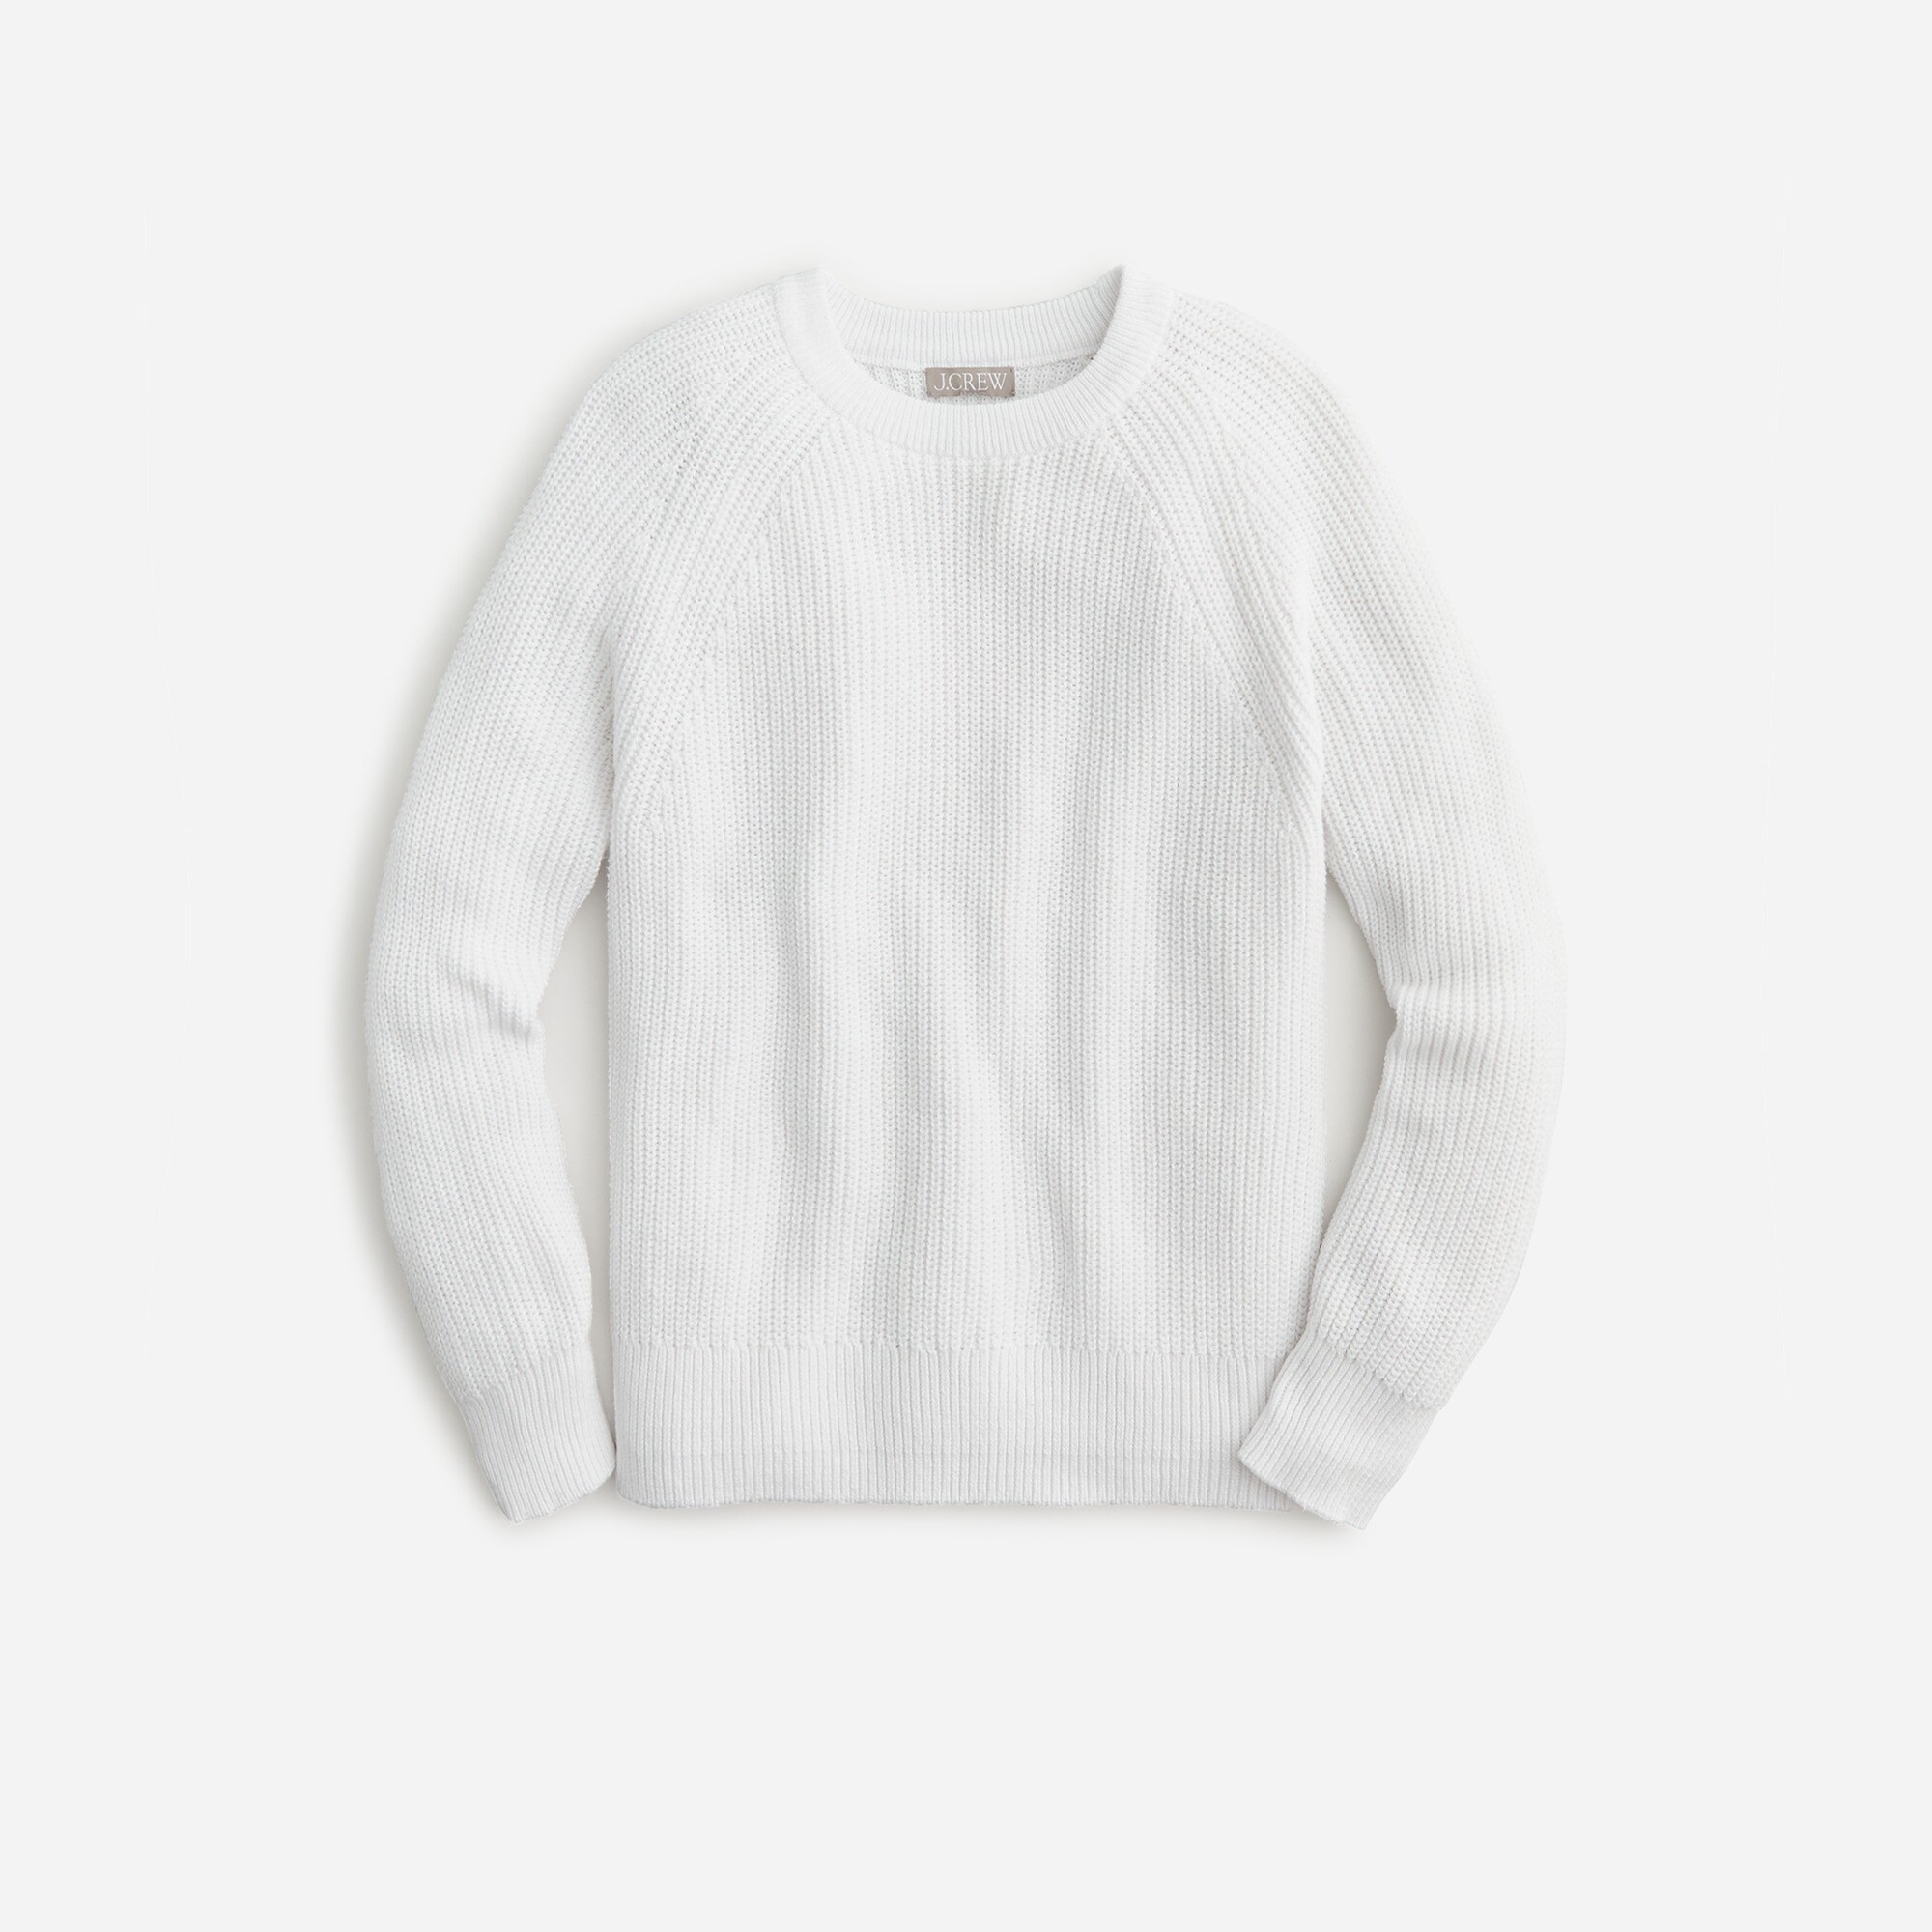  Cotton fisherman sweater